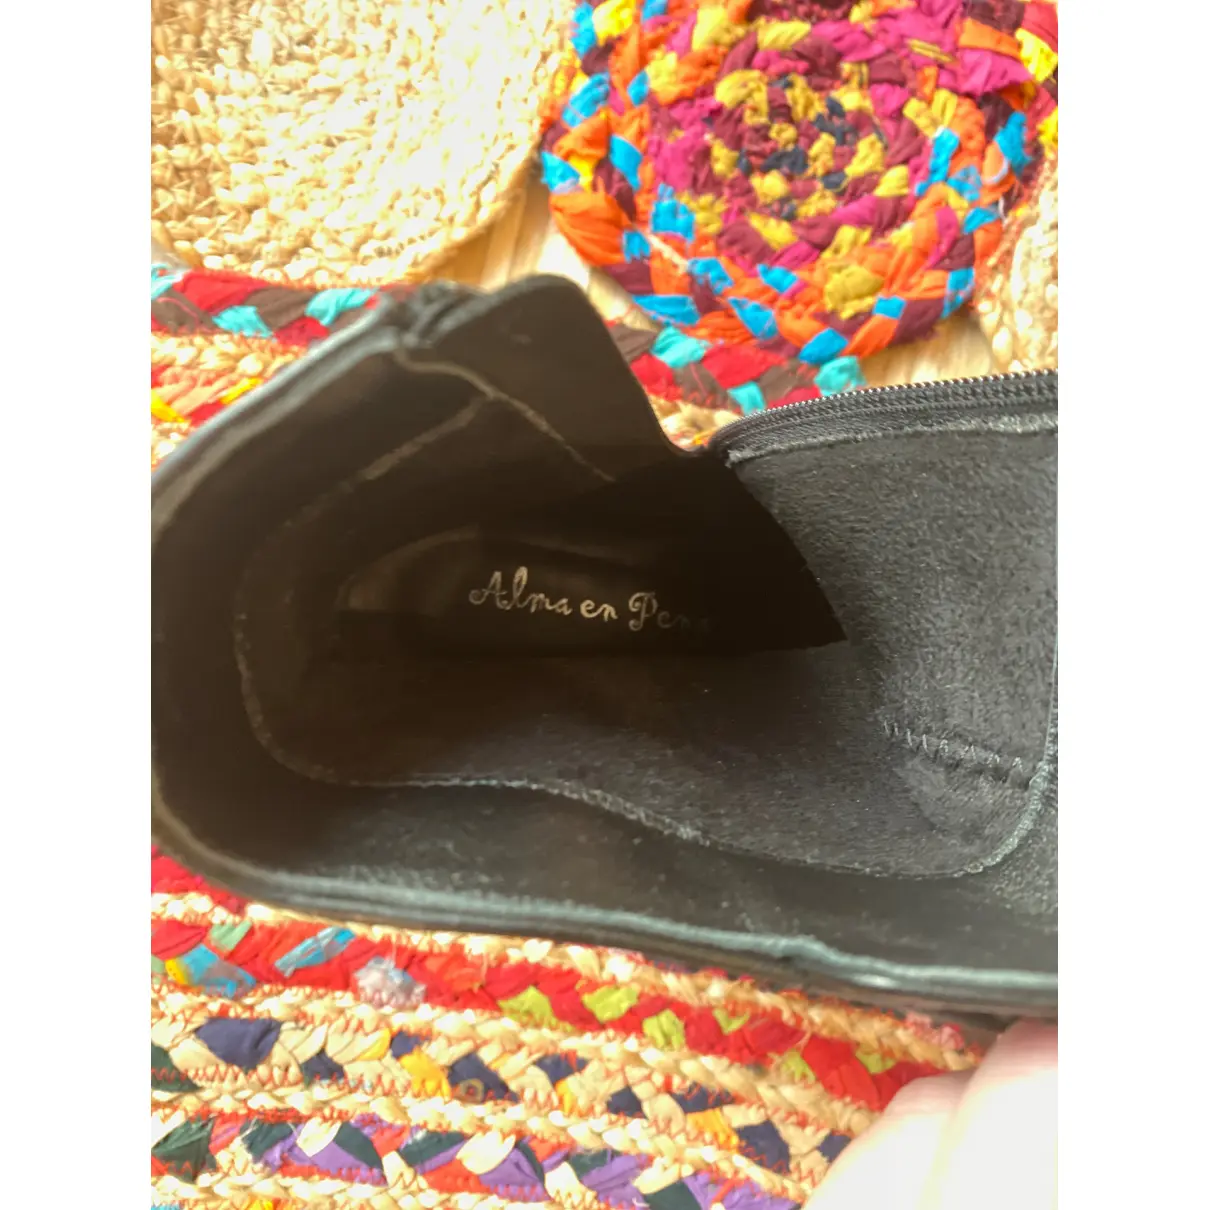 Buy Alma en Pena Leather ankle boots online